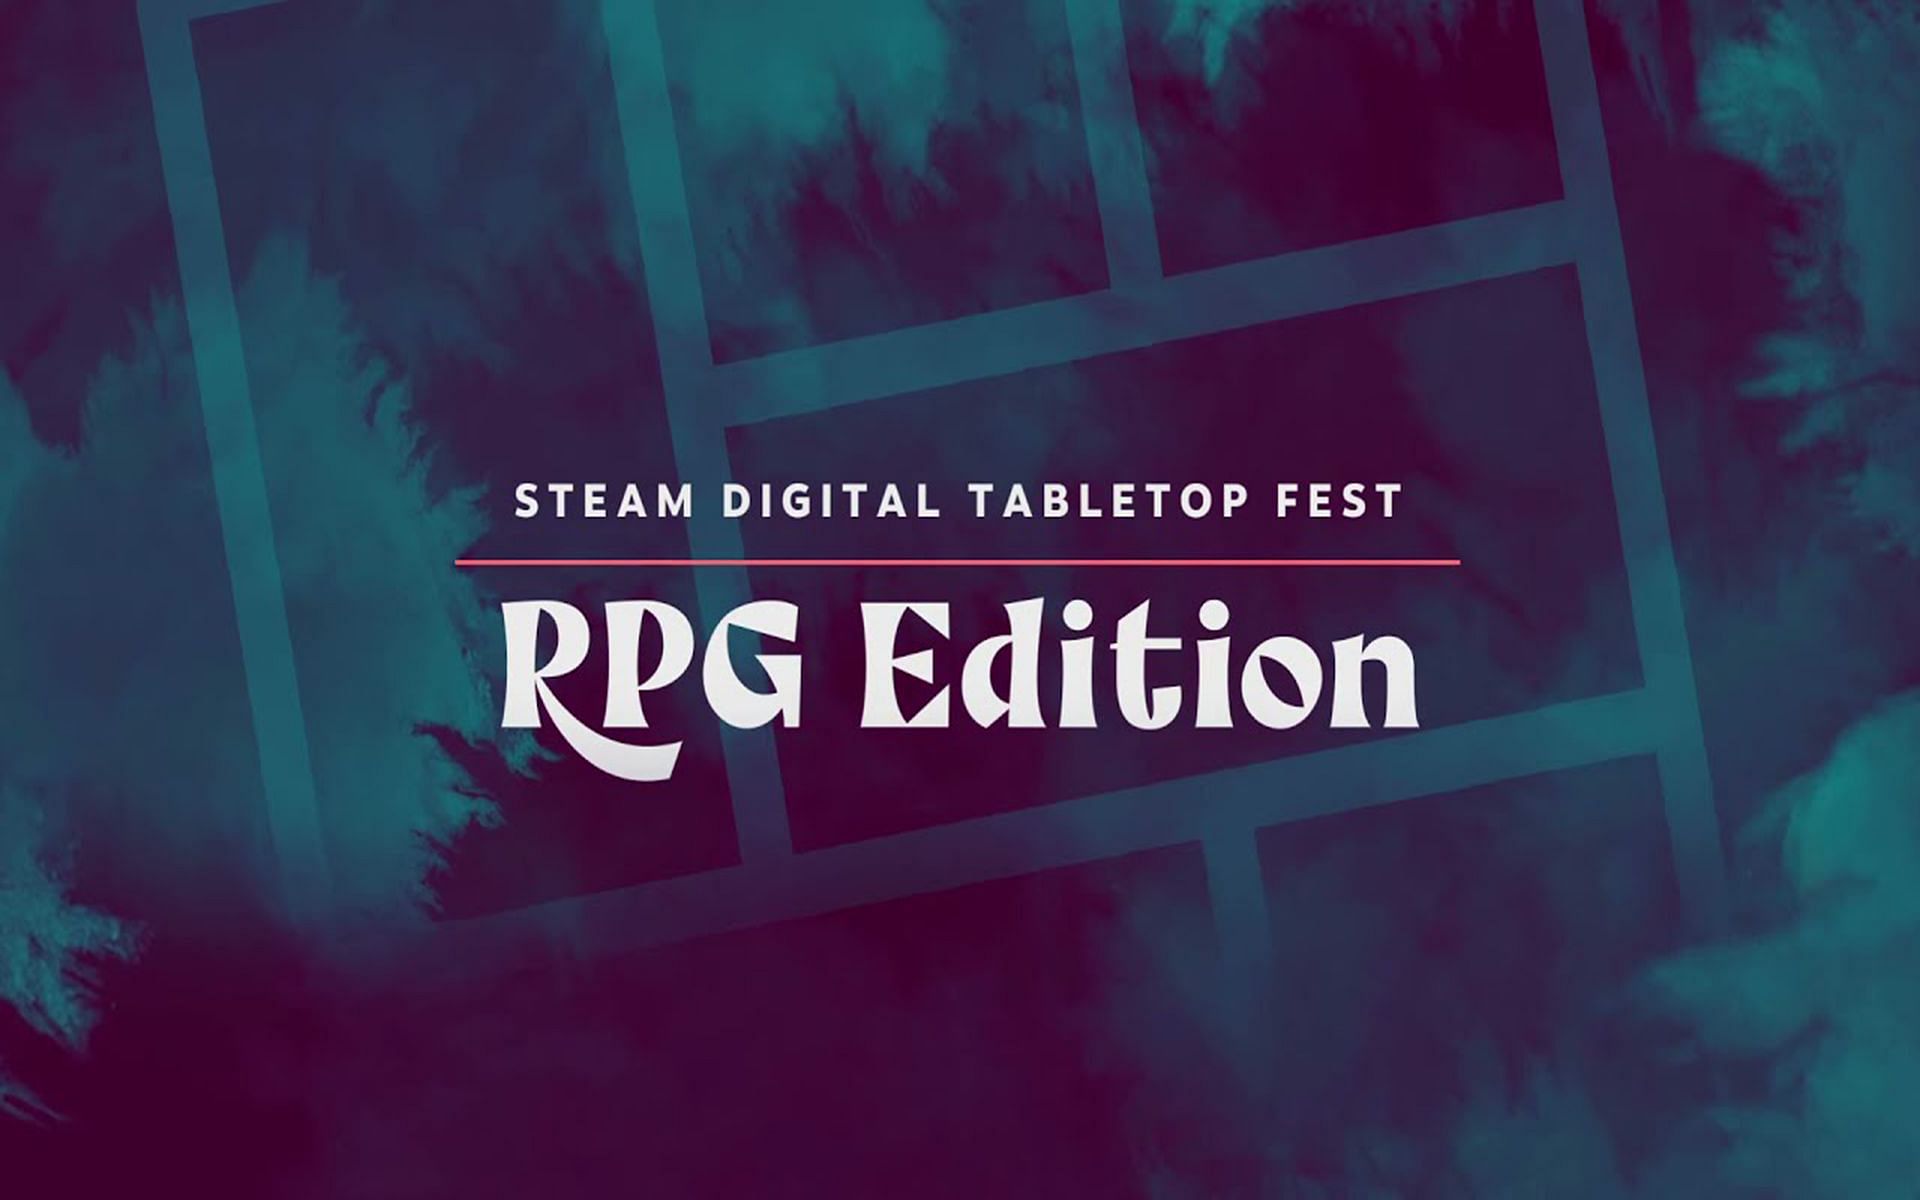 The Steam Digital Tabletop Fest 2021 (Image via Steam)